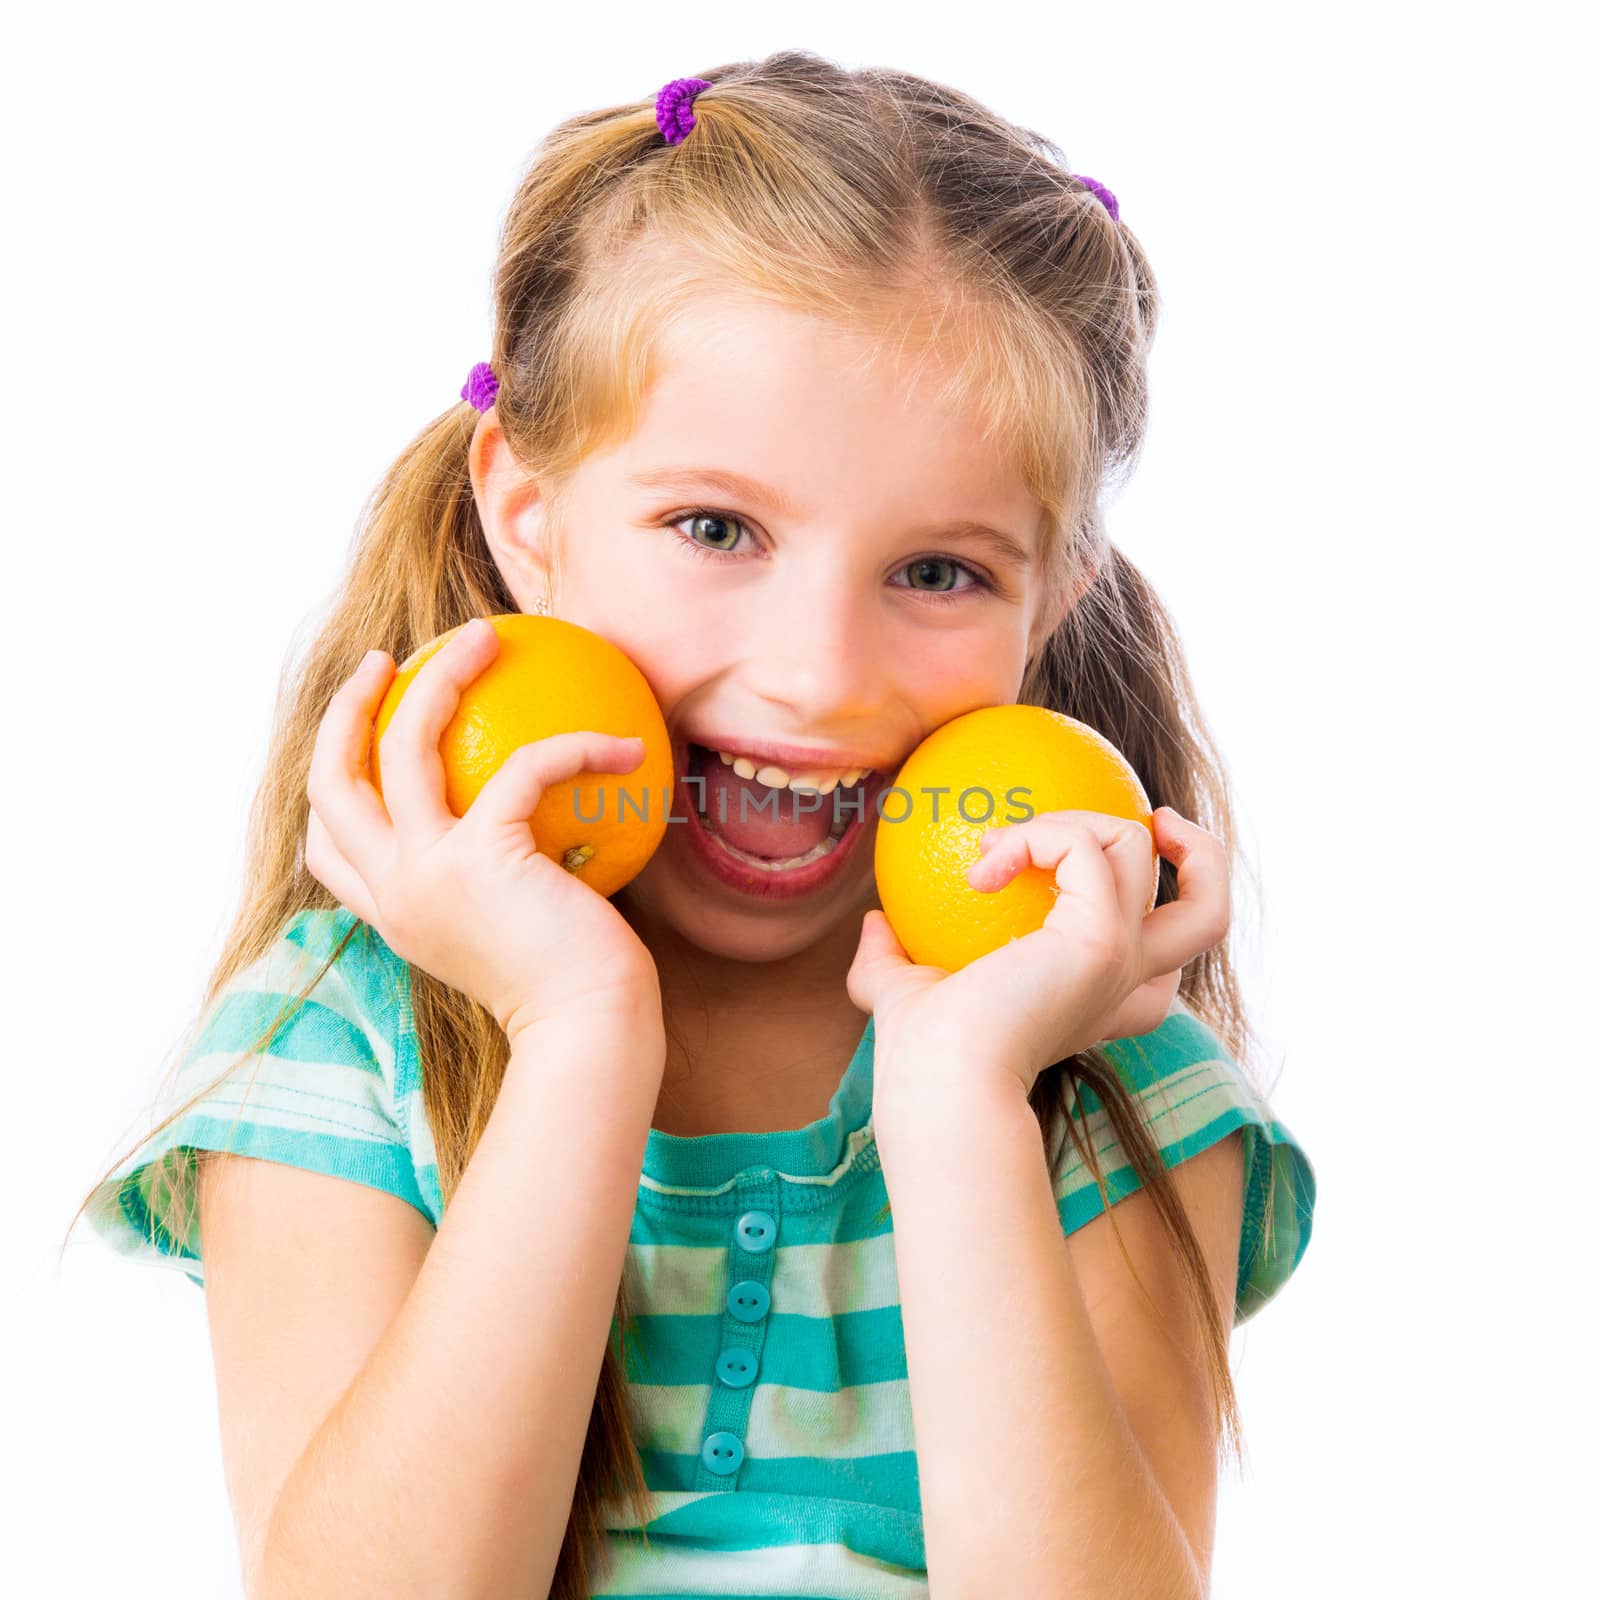 little girl with oranges by GekaSkr